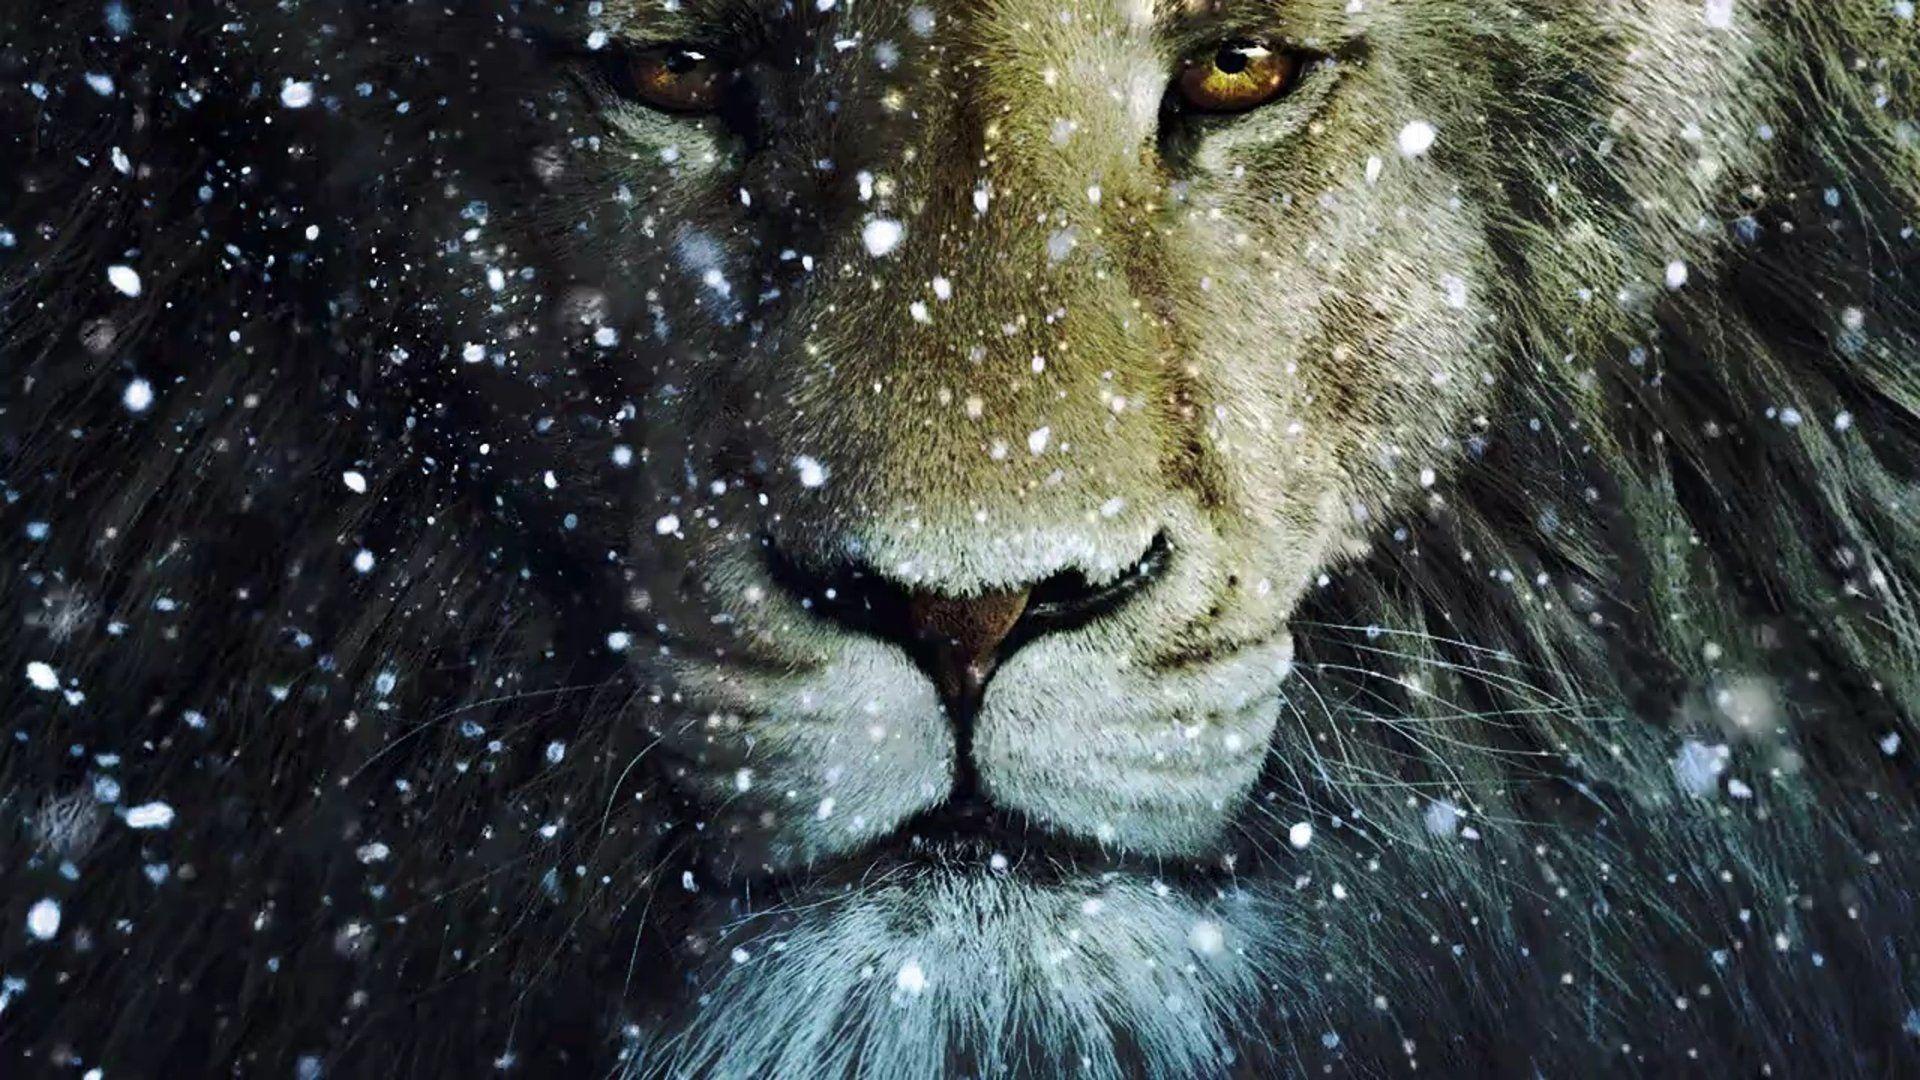 Aslan NARNIA 3 lion Full HD Wallpaper